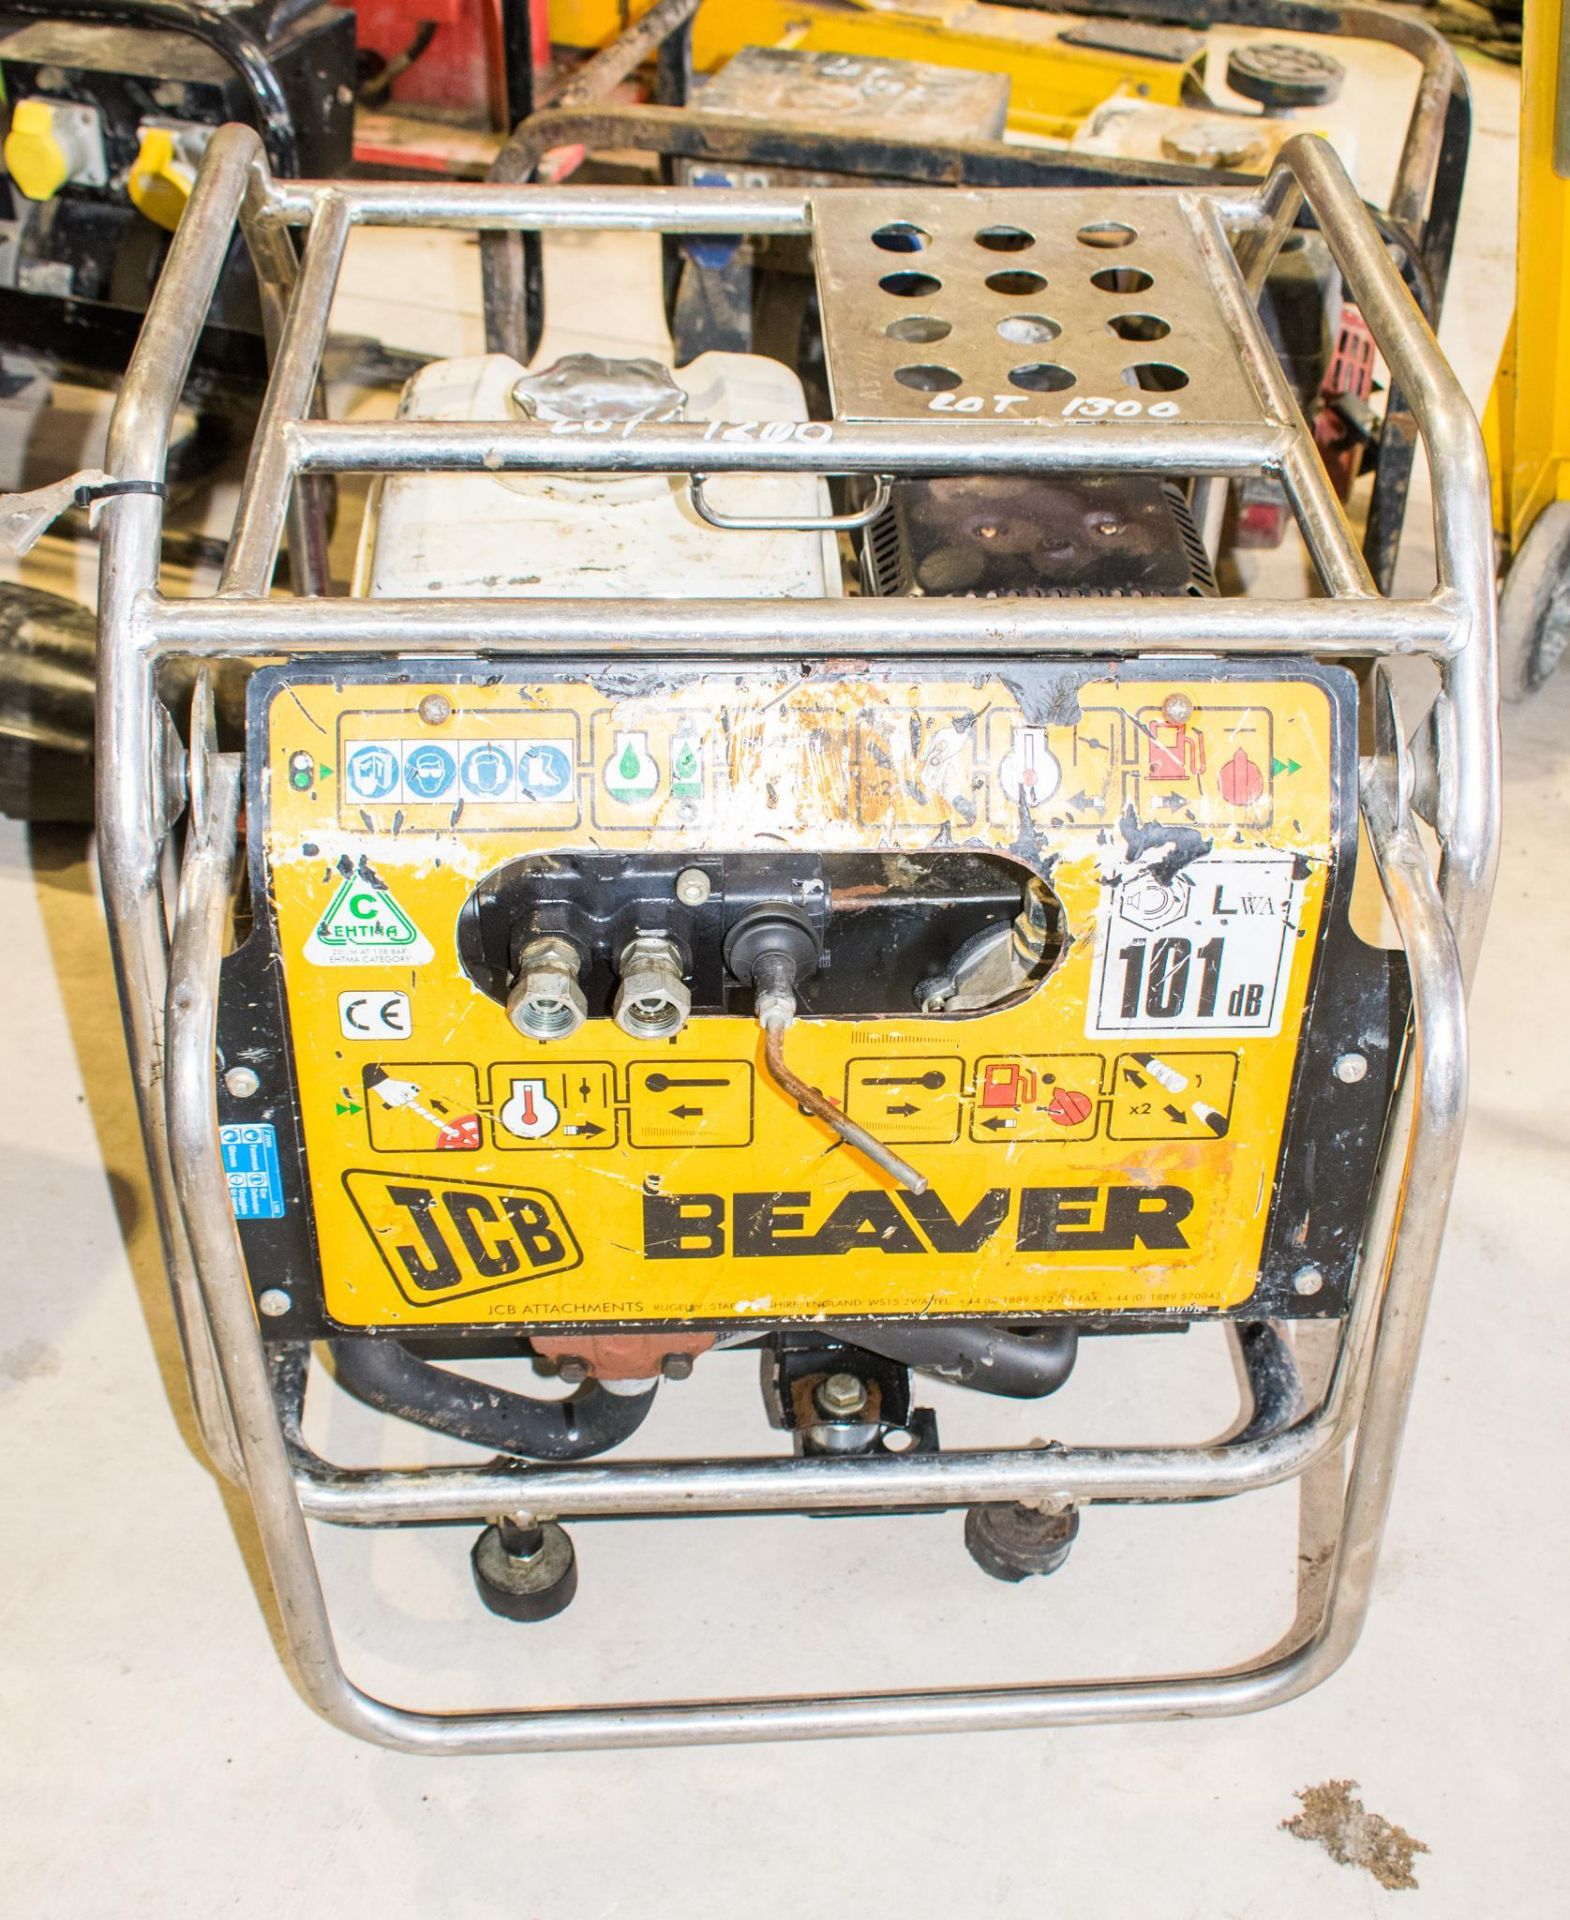 JCB Beaver petrol driven hydraulic power pack A577660